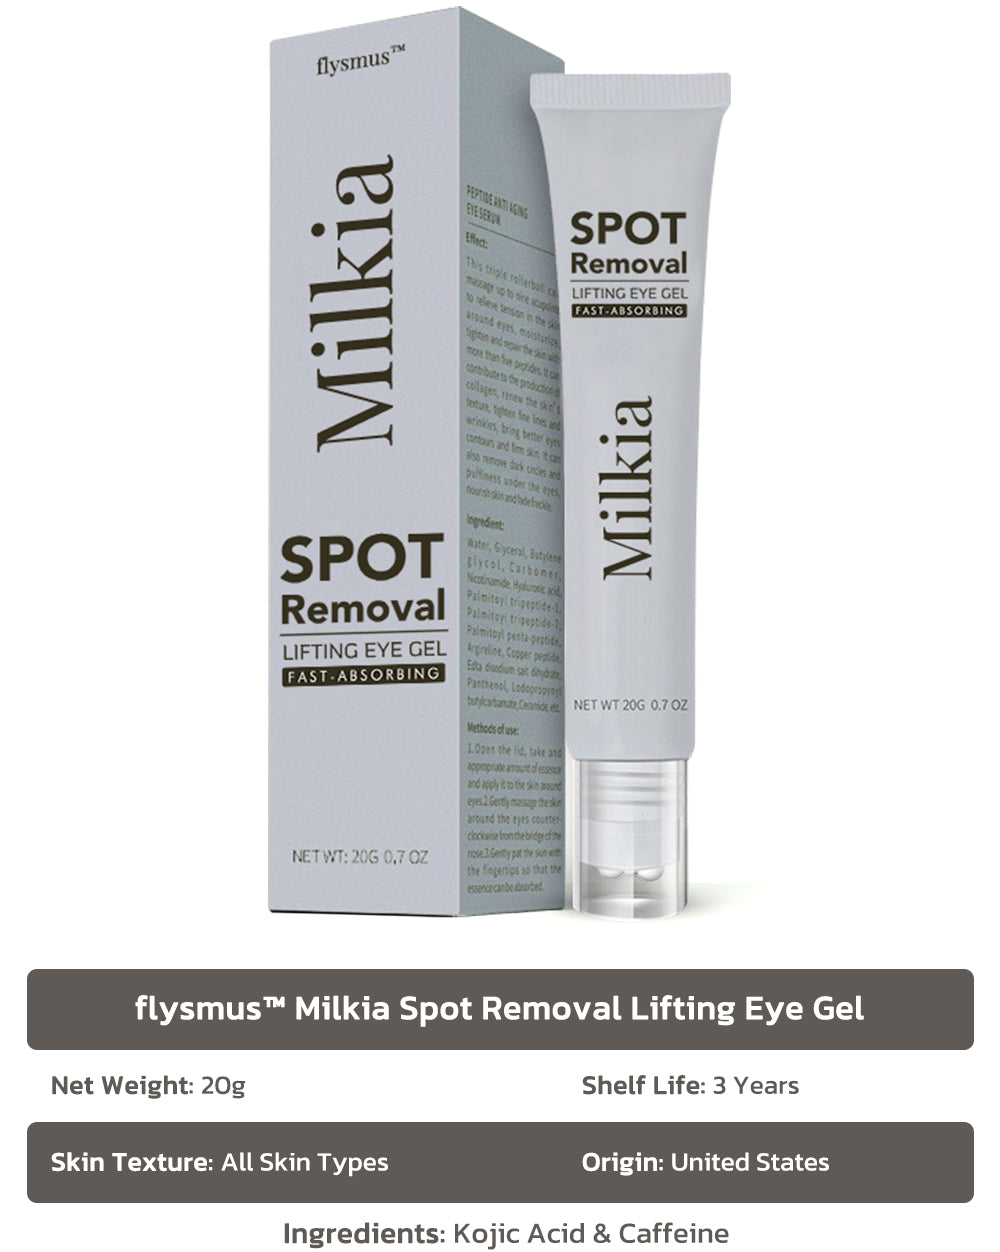 CC™ Milkia Spot Removal Lifting Eye Gel